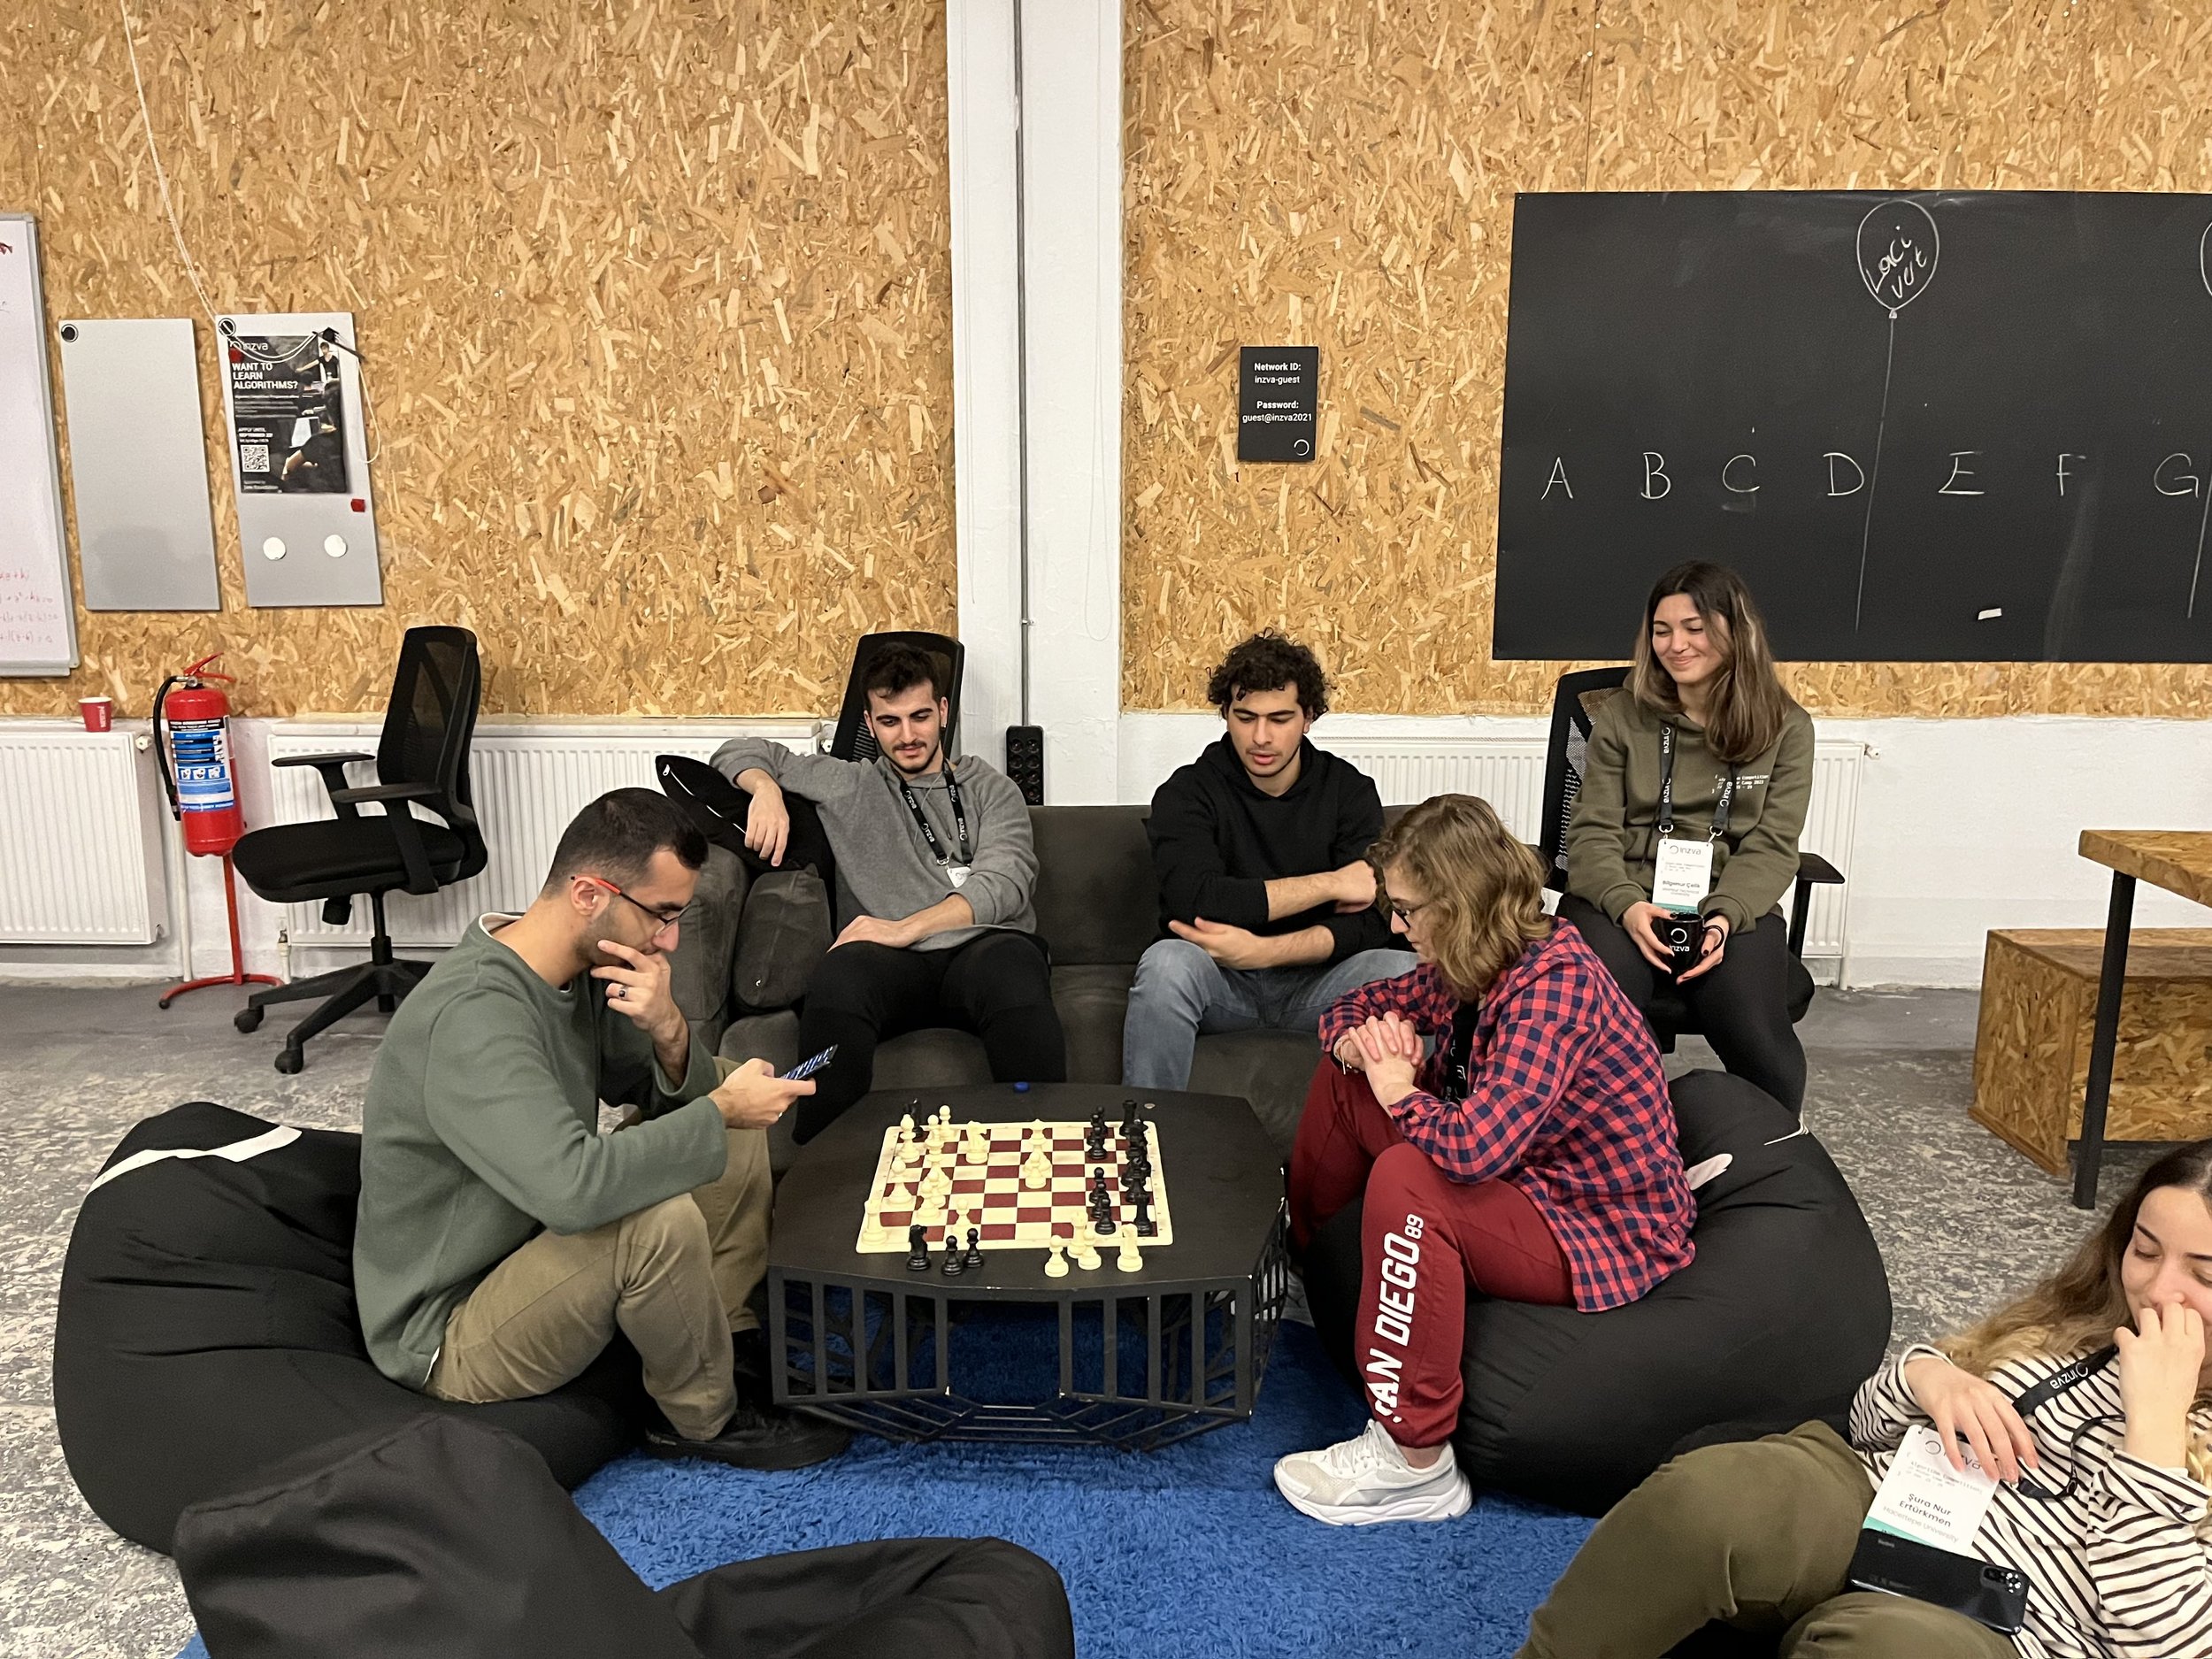  The Chess tournament